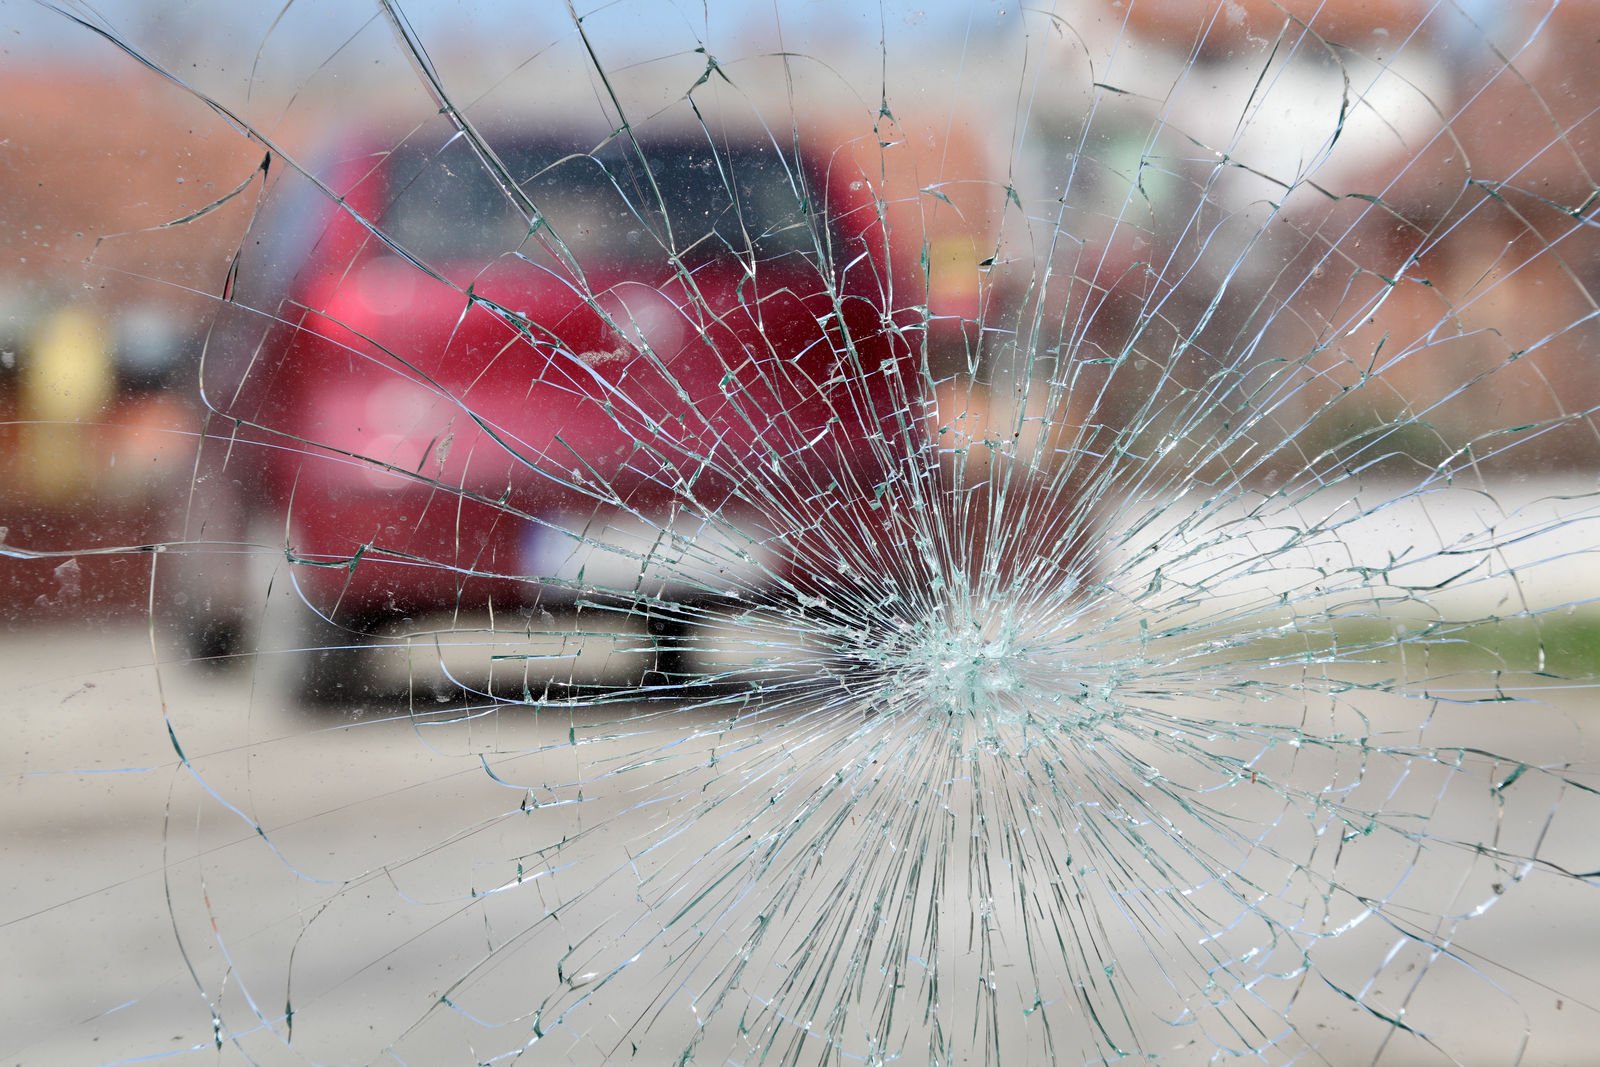 Does car insurance cover broken windows?